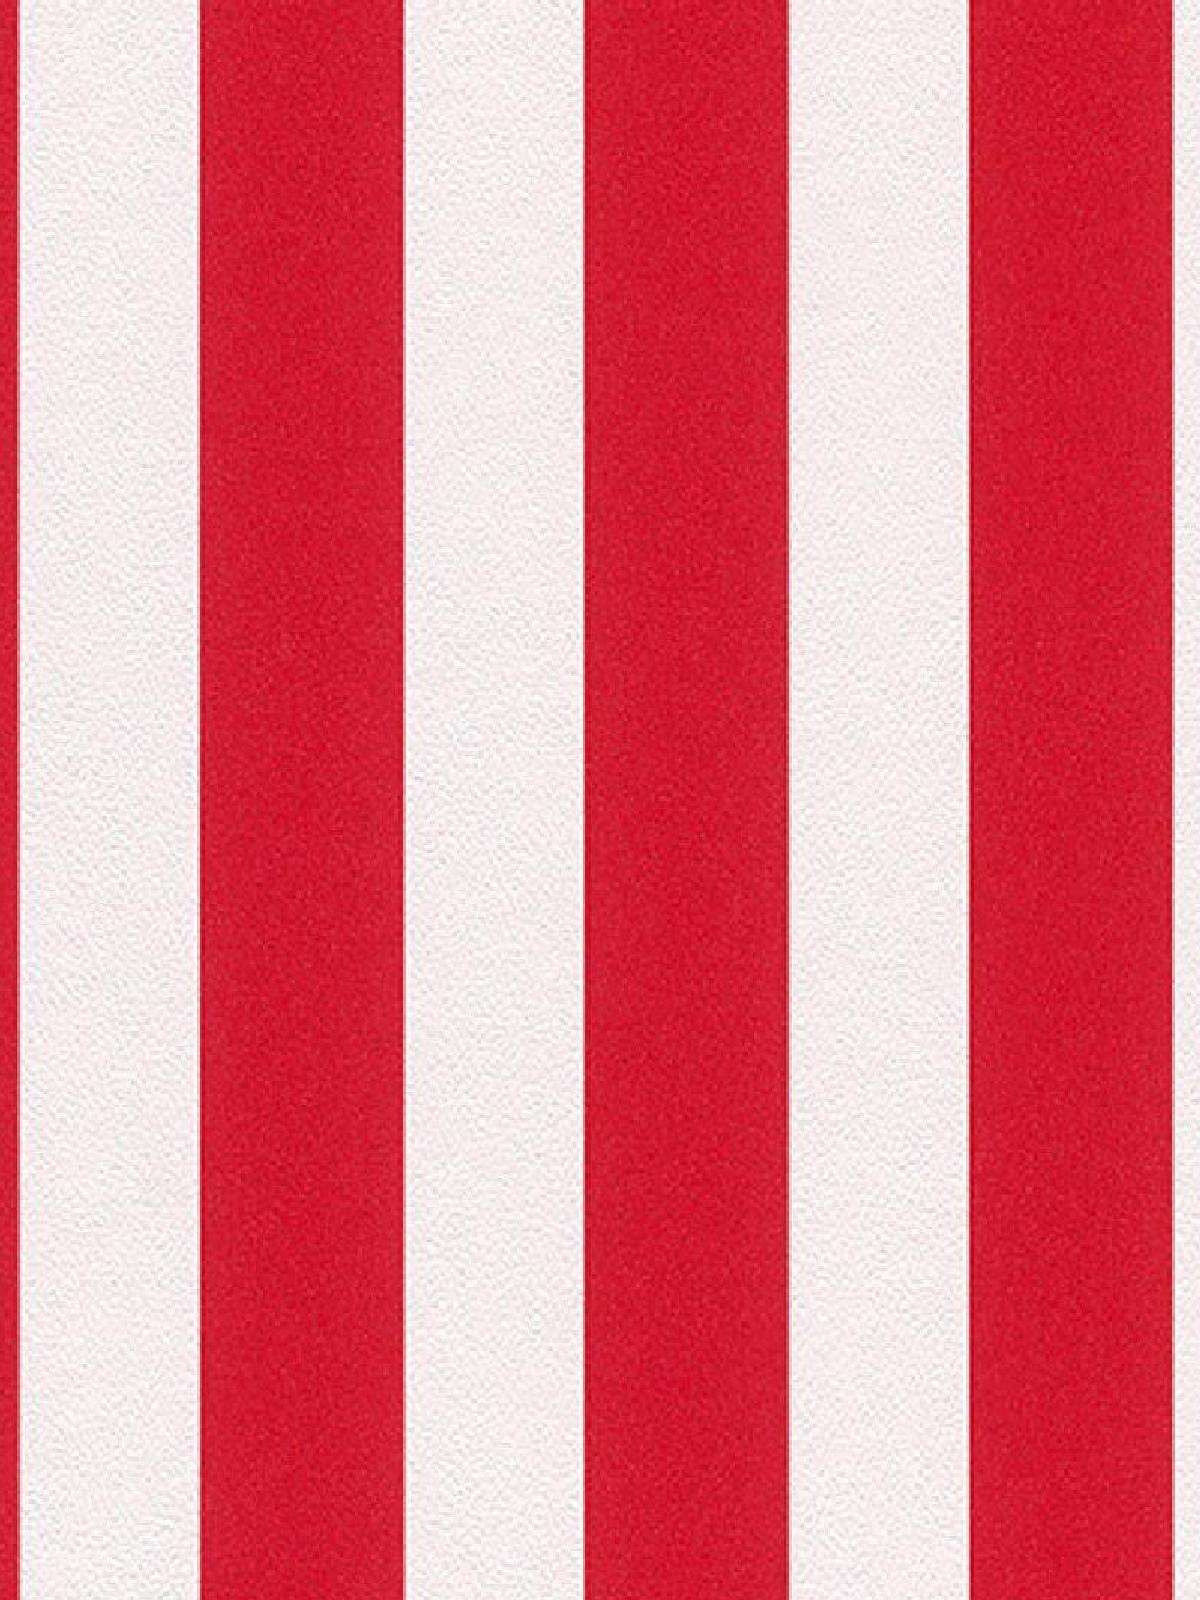 Printables. Stripes wallpaper, Wallpaper, Red and white stripes